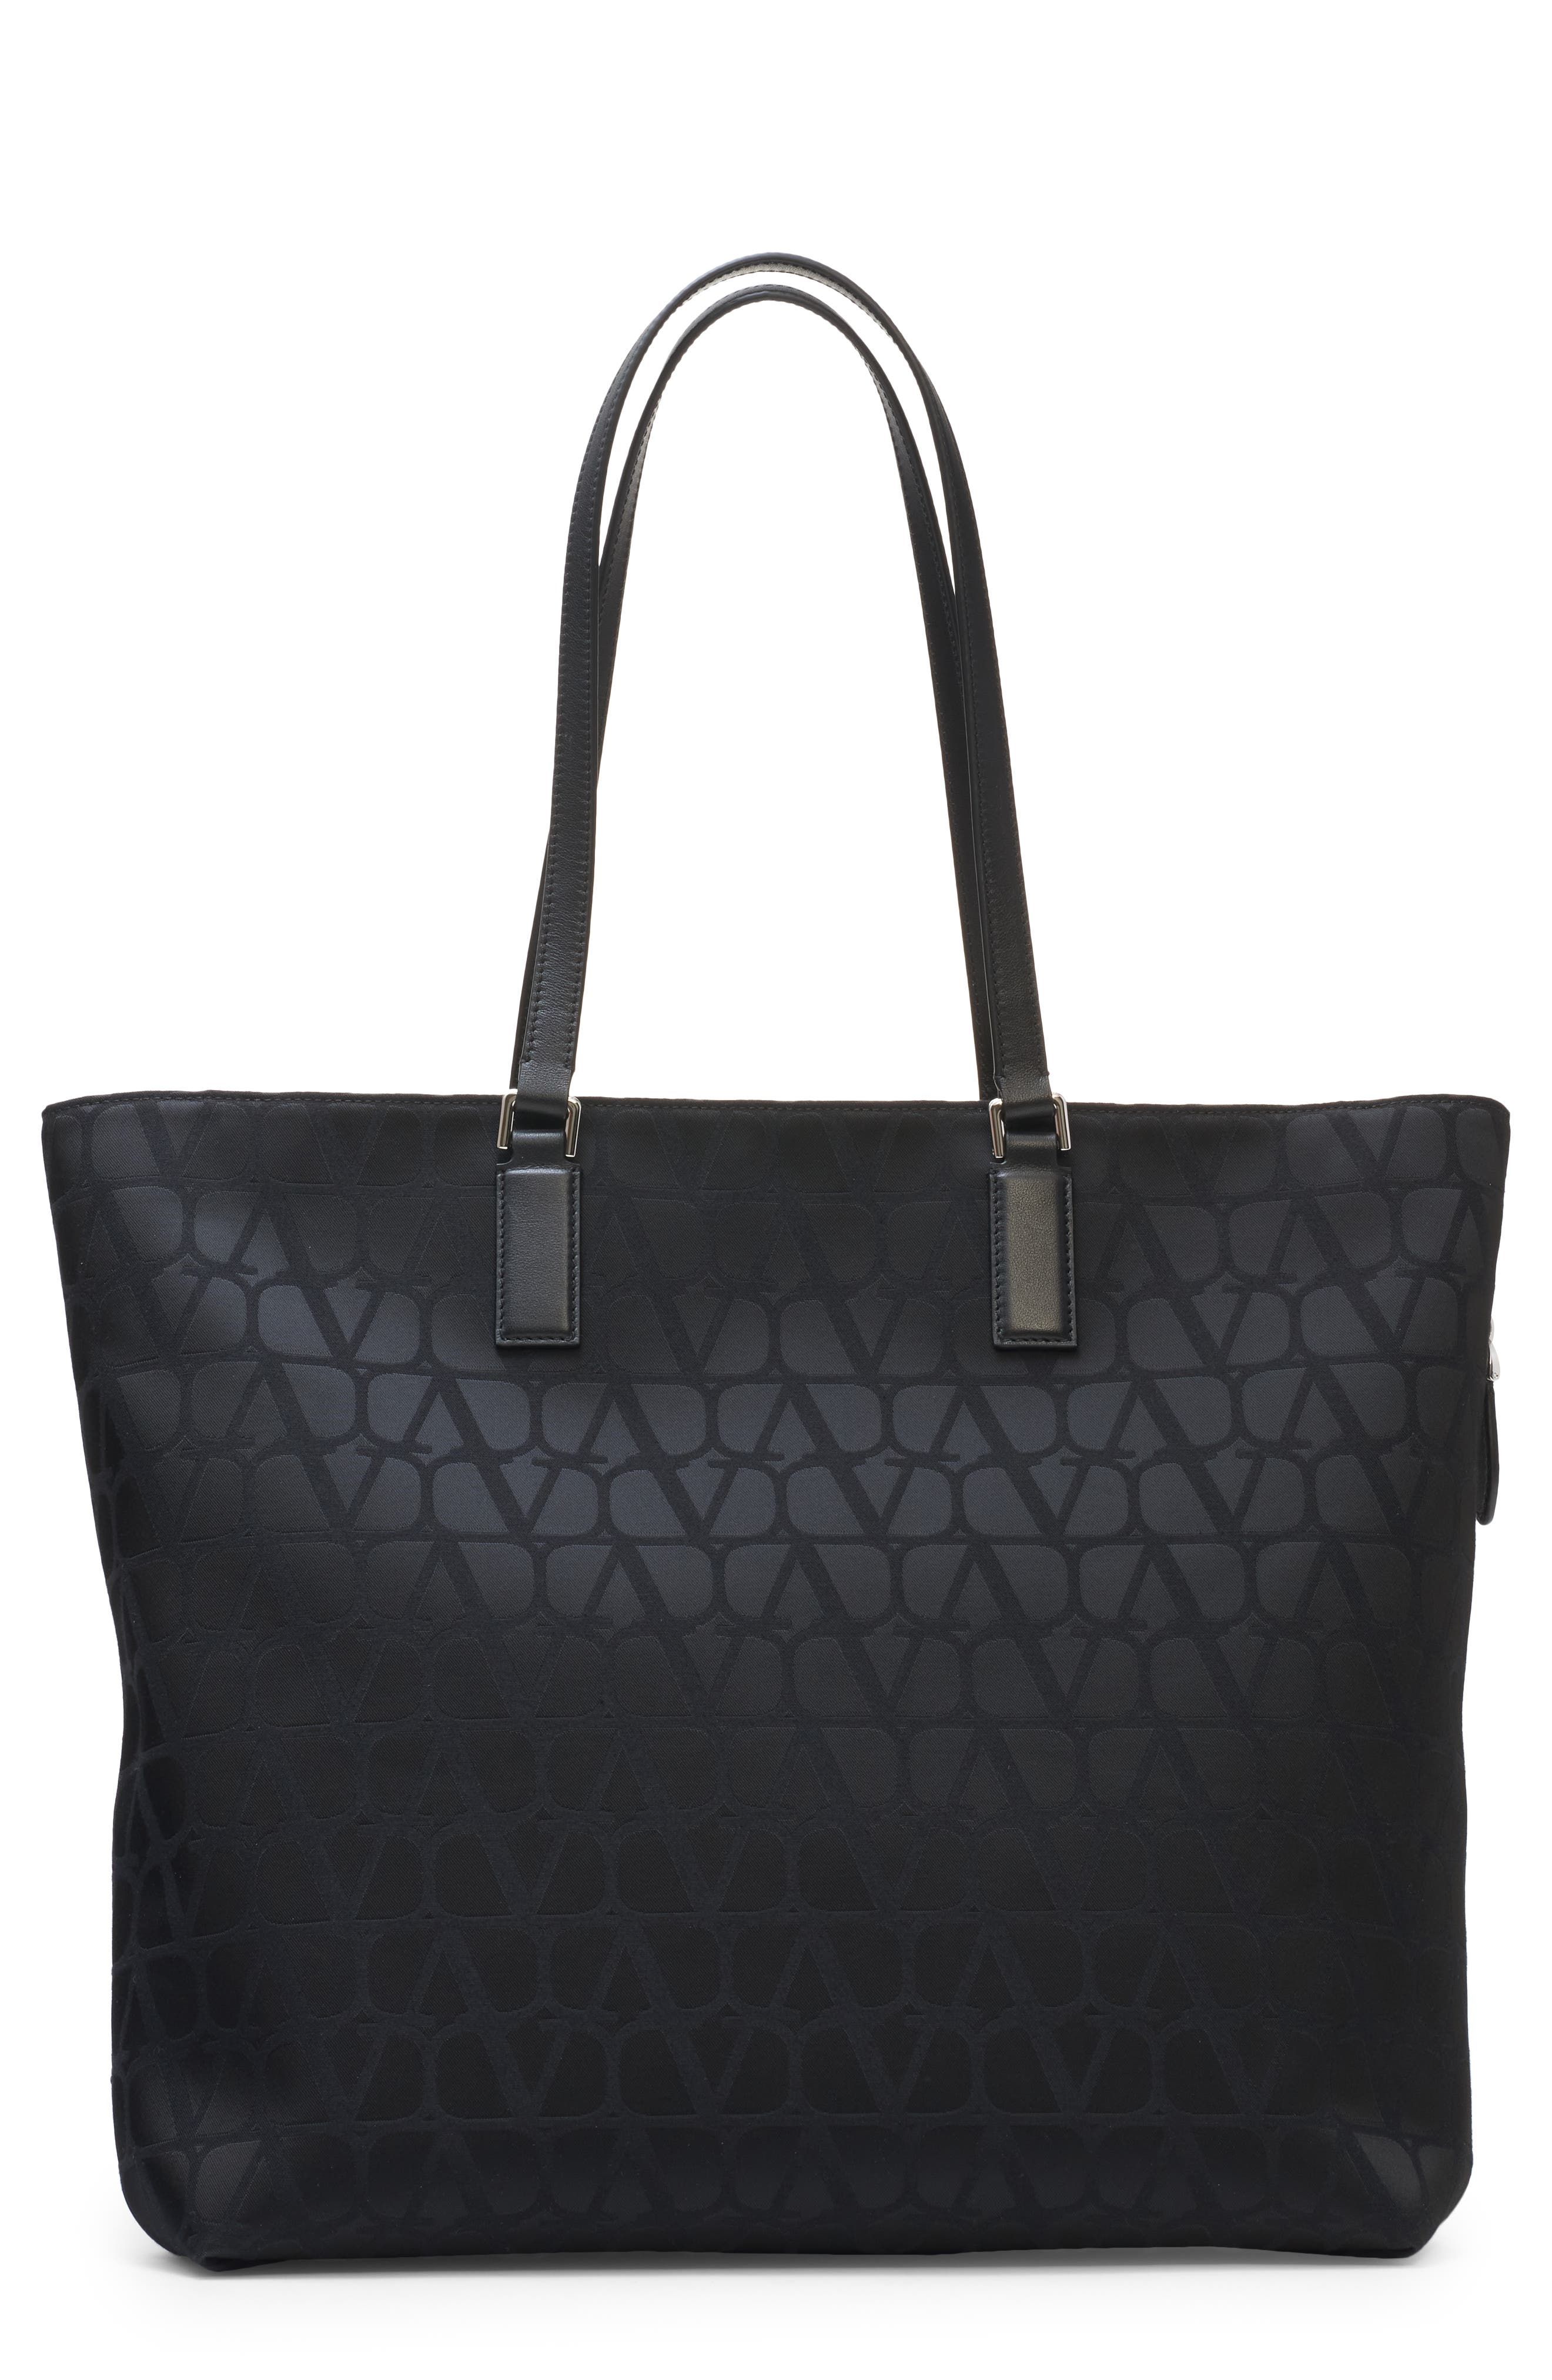 Valentino Garavani Toile Iconographe leather-trim backpack - Black